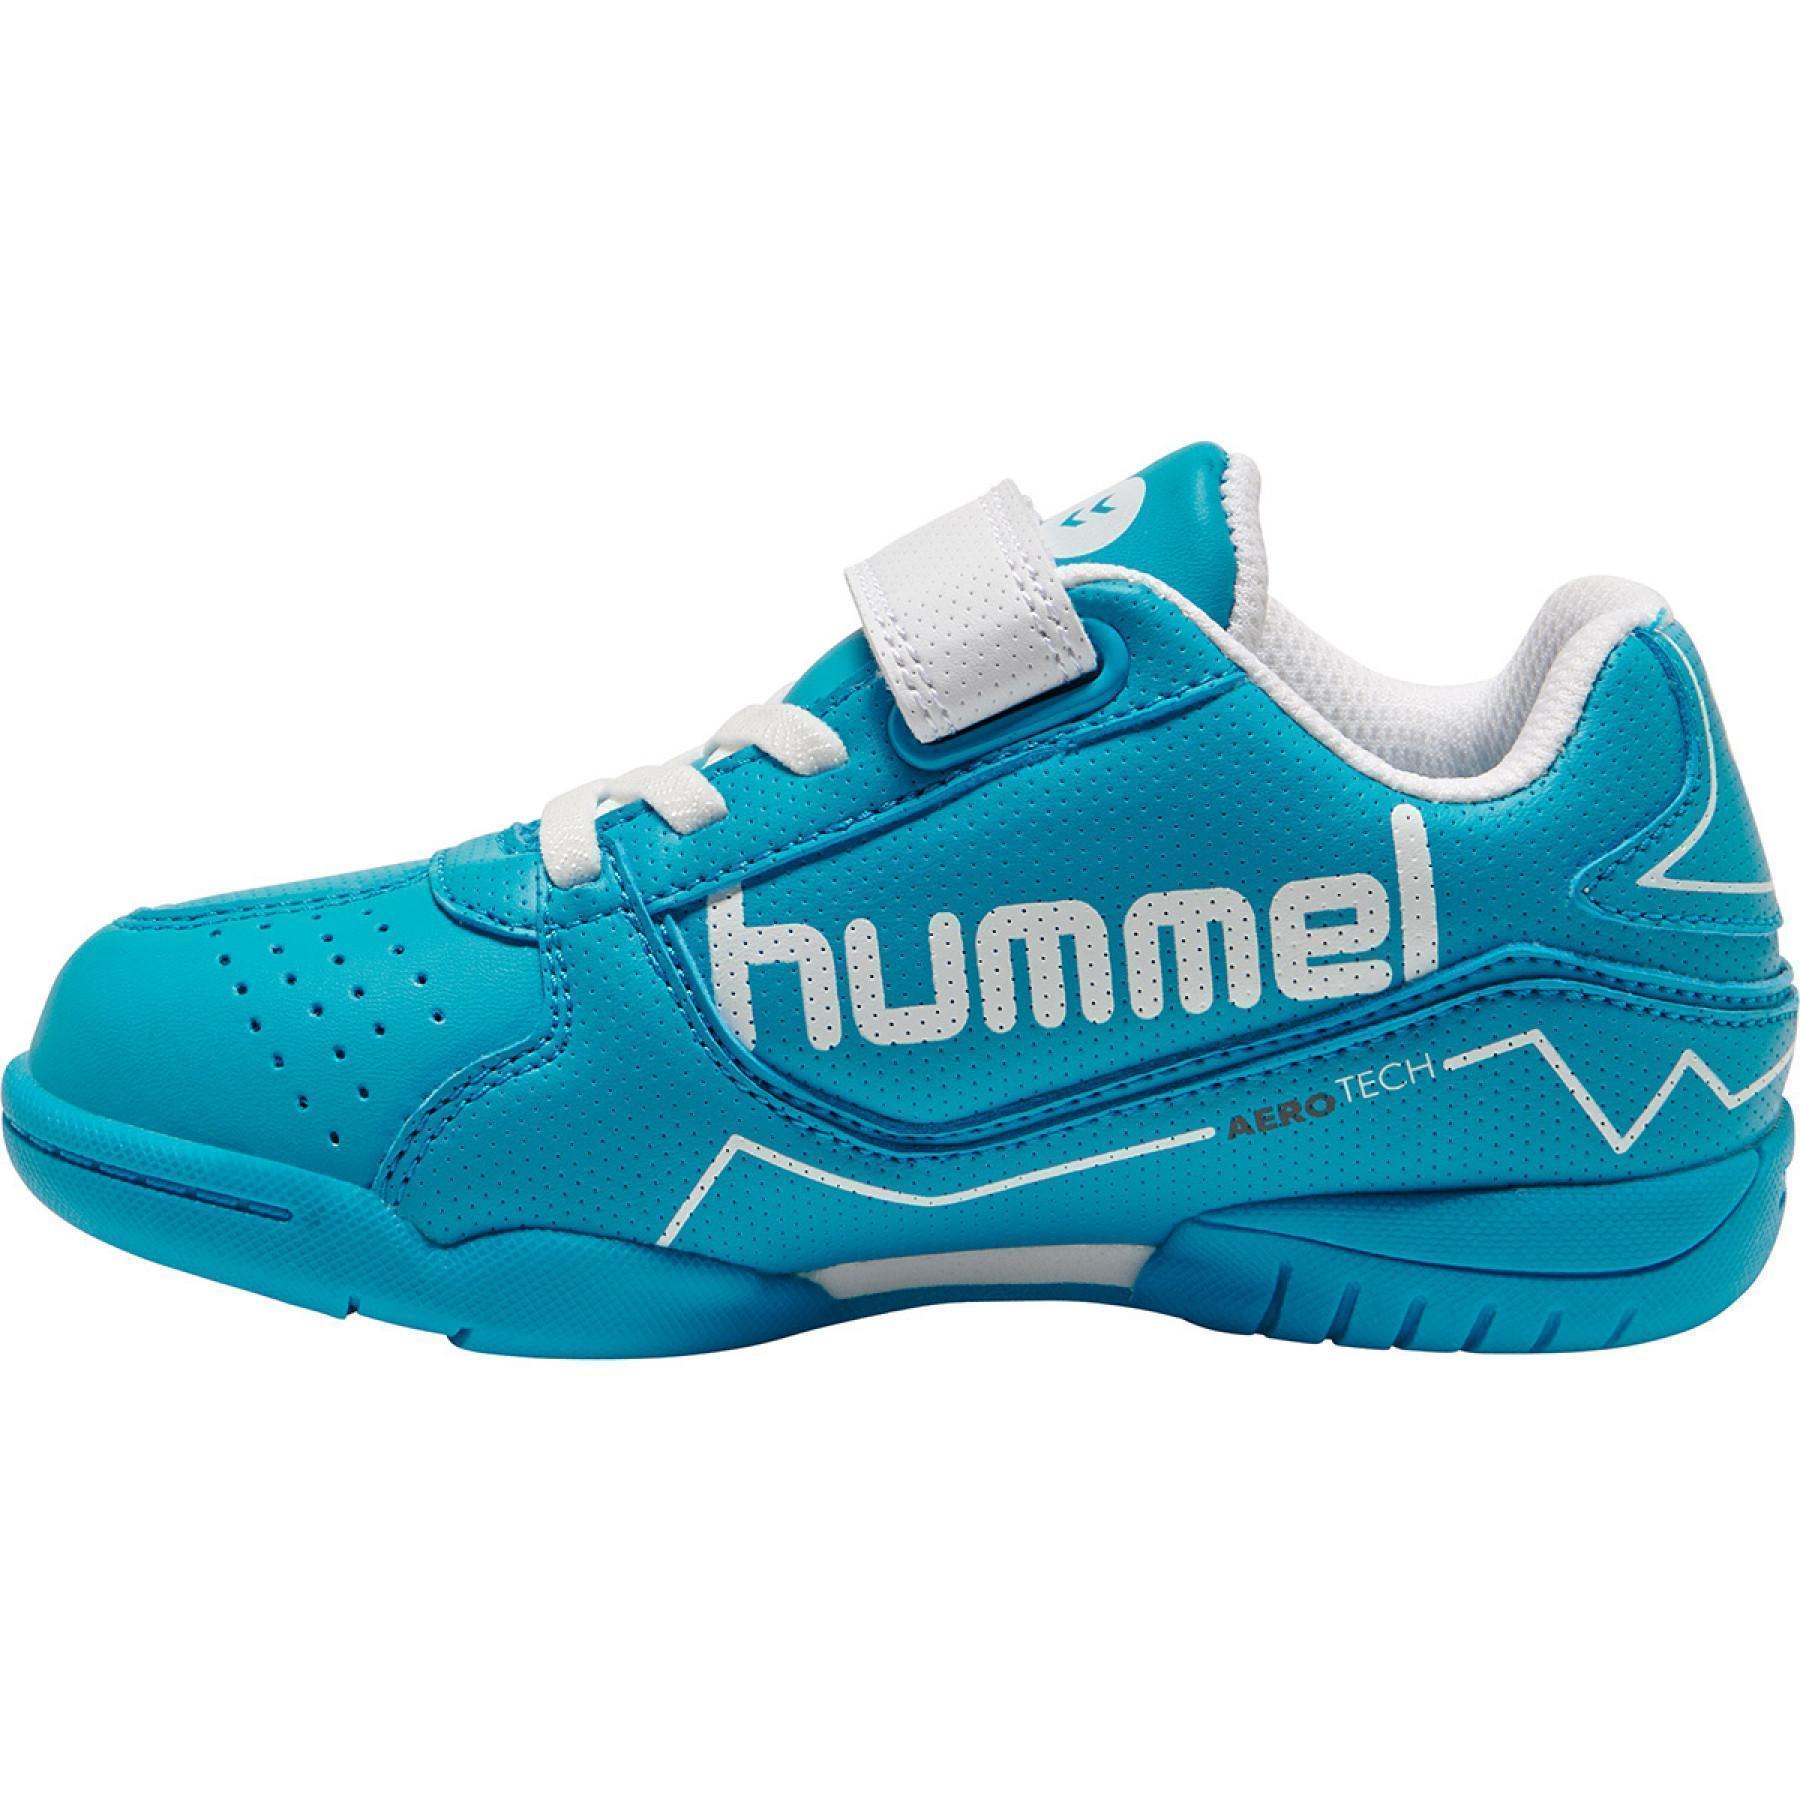 Sneakers Hummel aerotech swap 3.0 vc